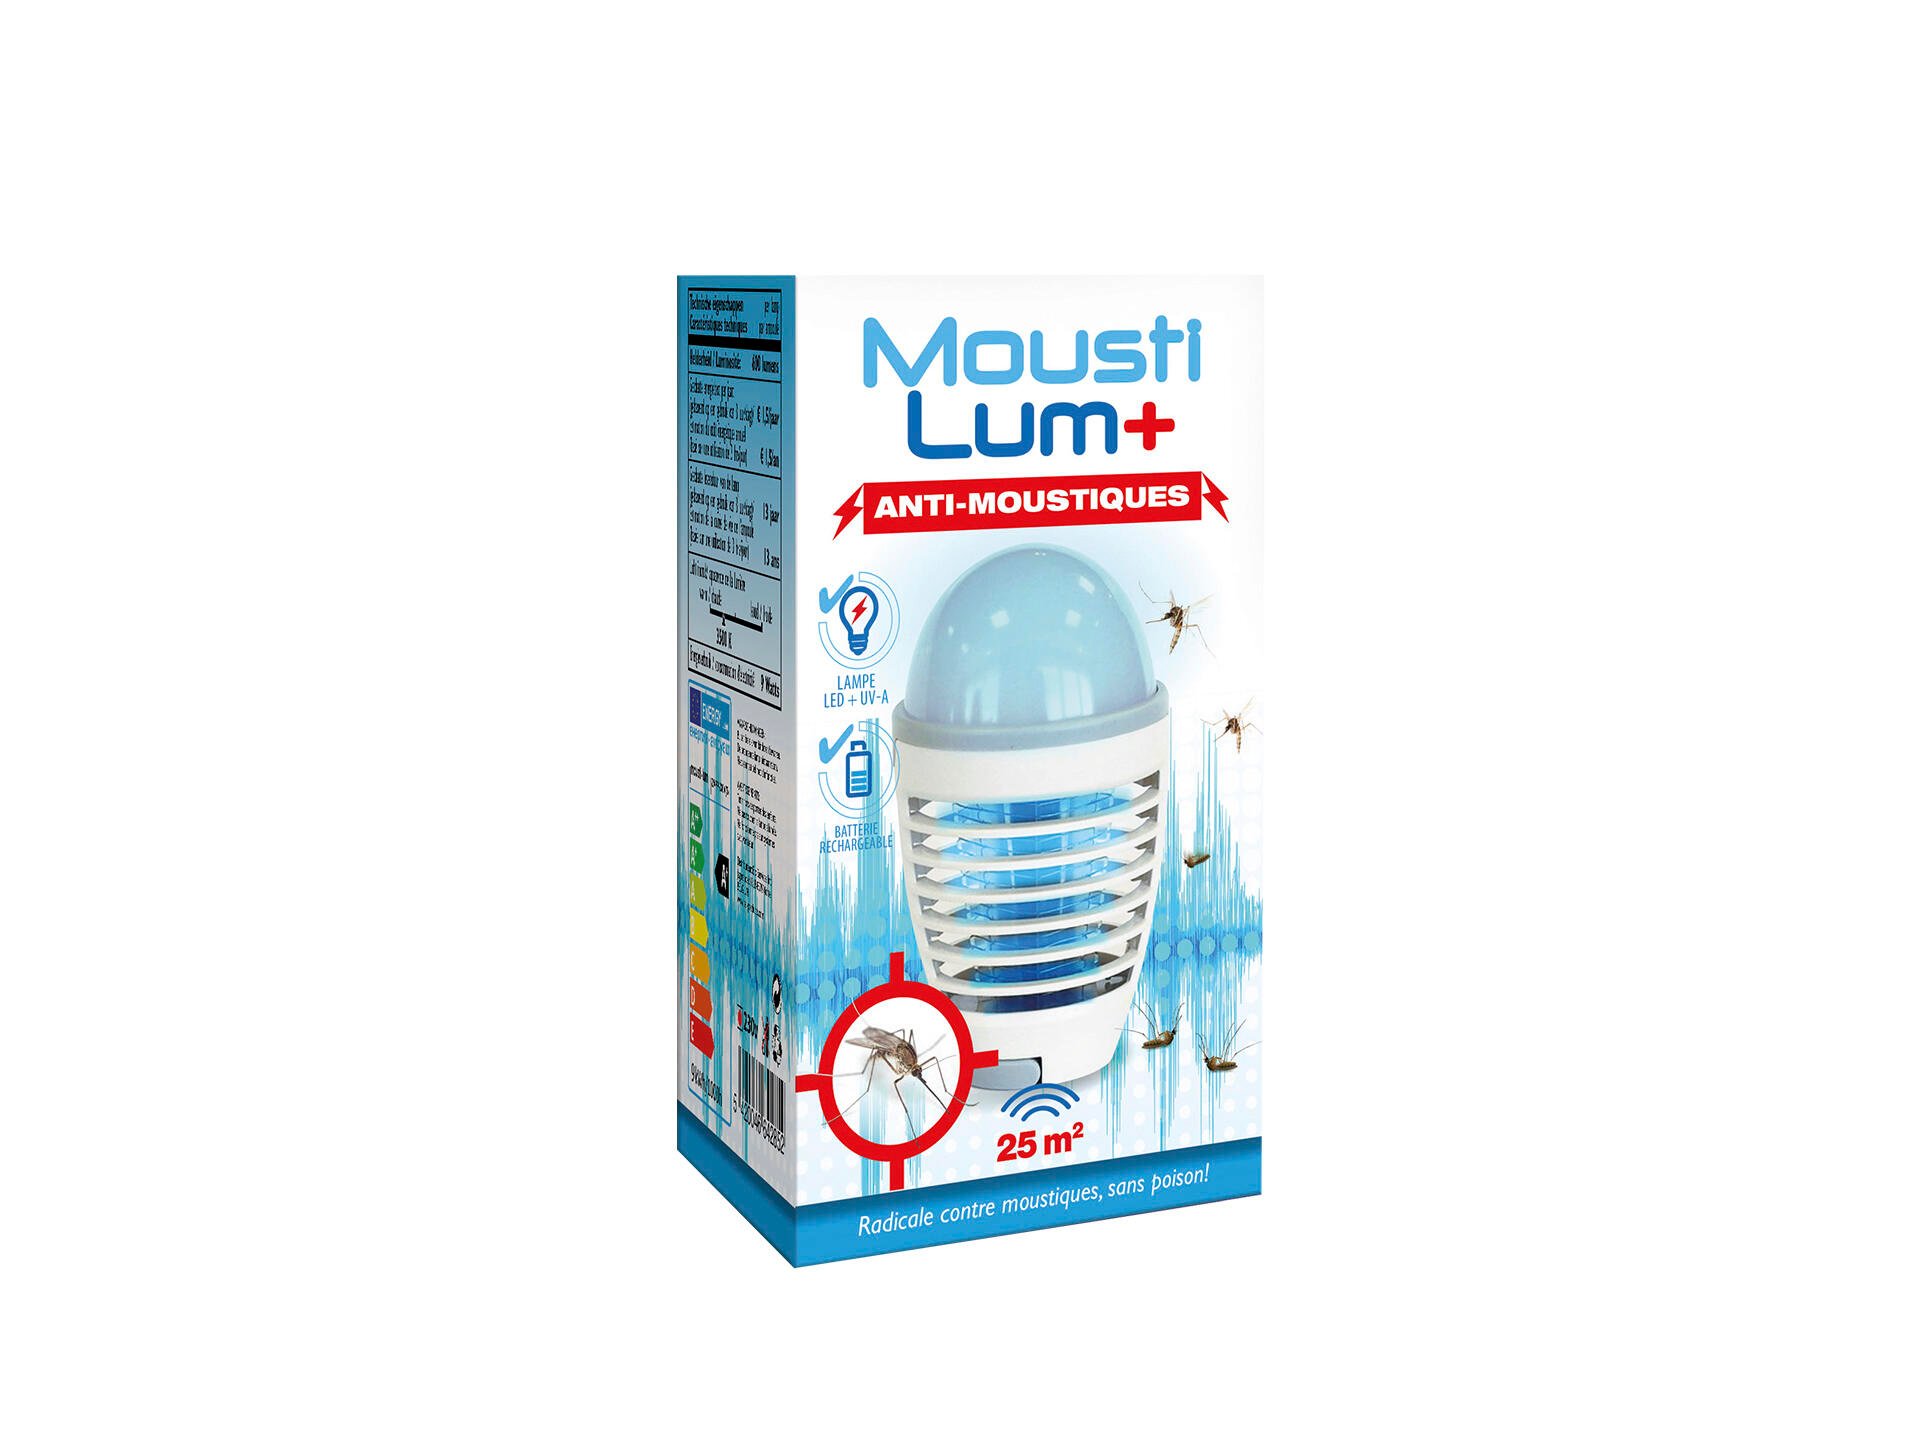 BSI Mousti Lum+ lampe UV anti-insectes USB rechargeable